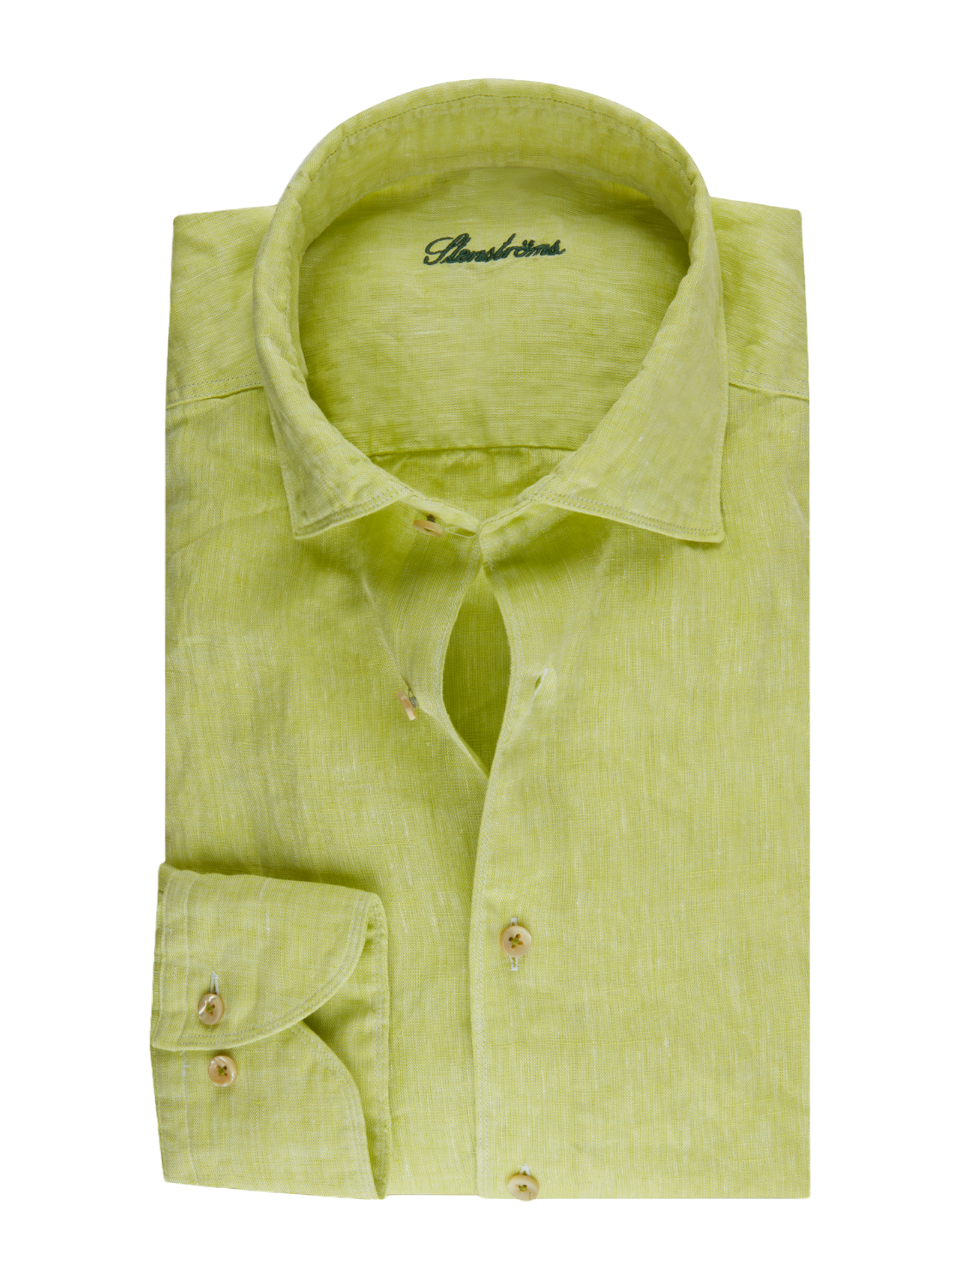 Stenstroms Linen Shirt in Light Green